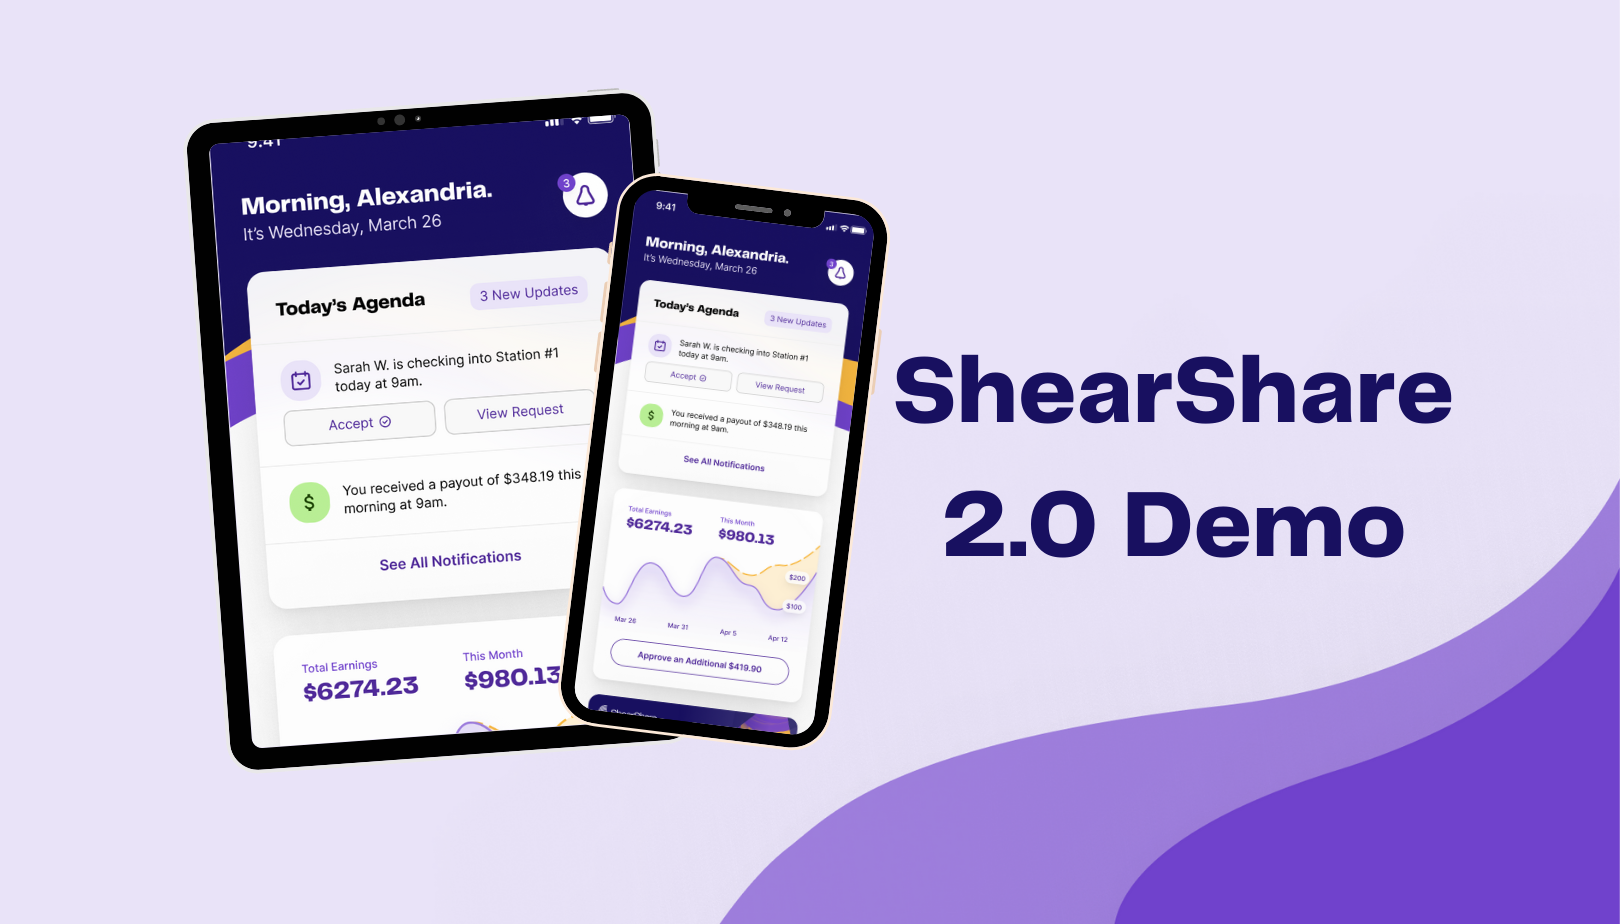 ShearShare 2.0 Demo